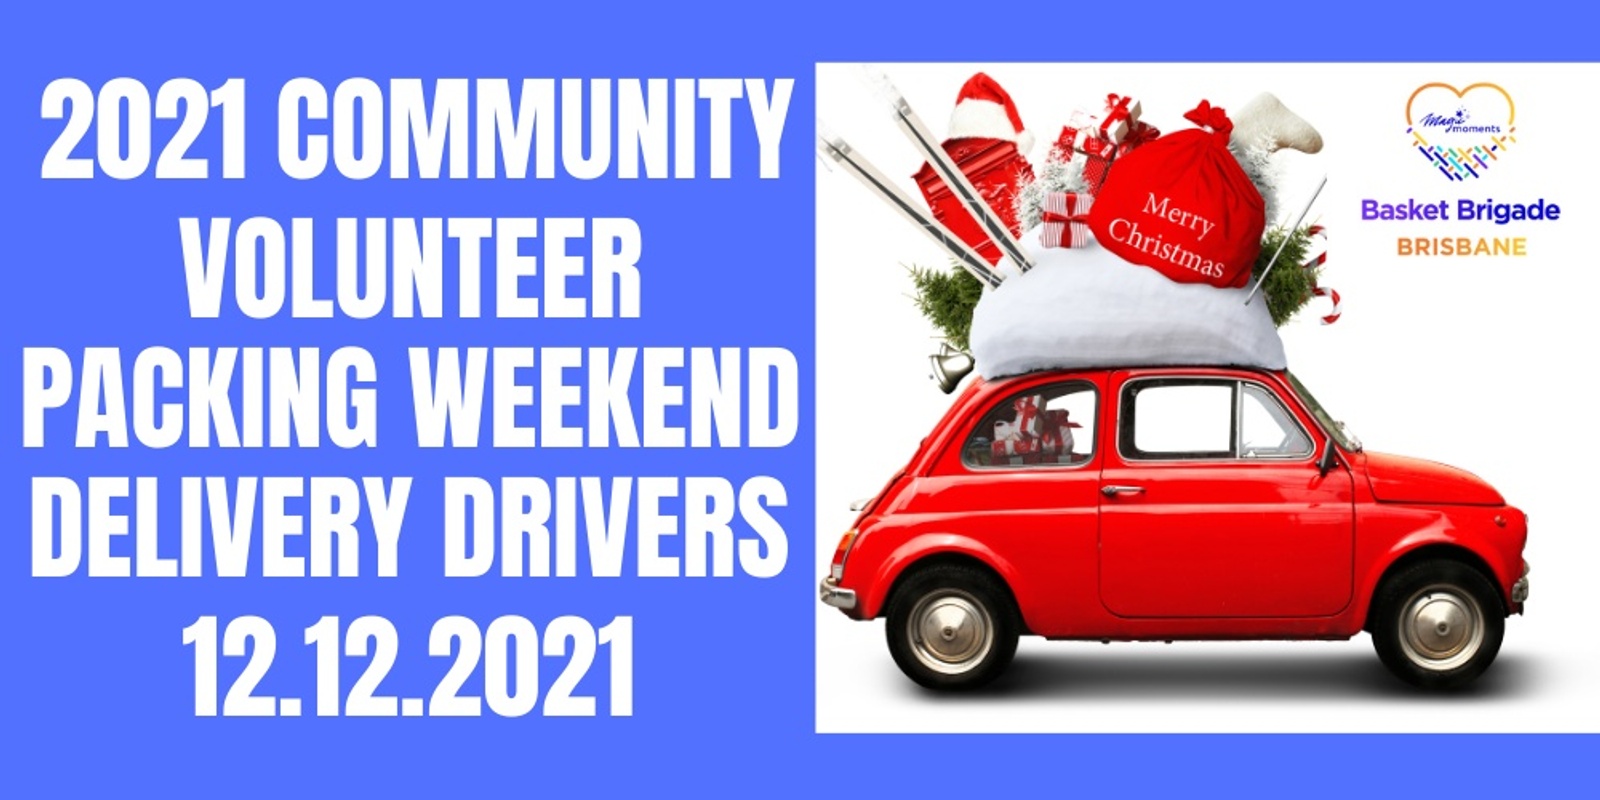 Banner image for Brisbane Basket Brigade 2021 Community Volunteer Packing Weekend DELIVERY DRIVERS